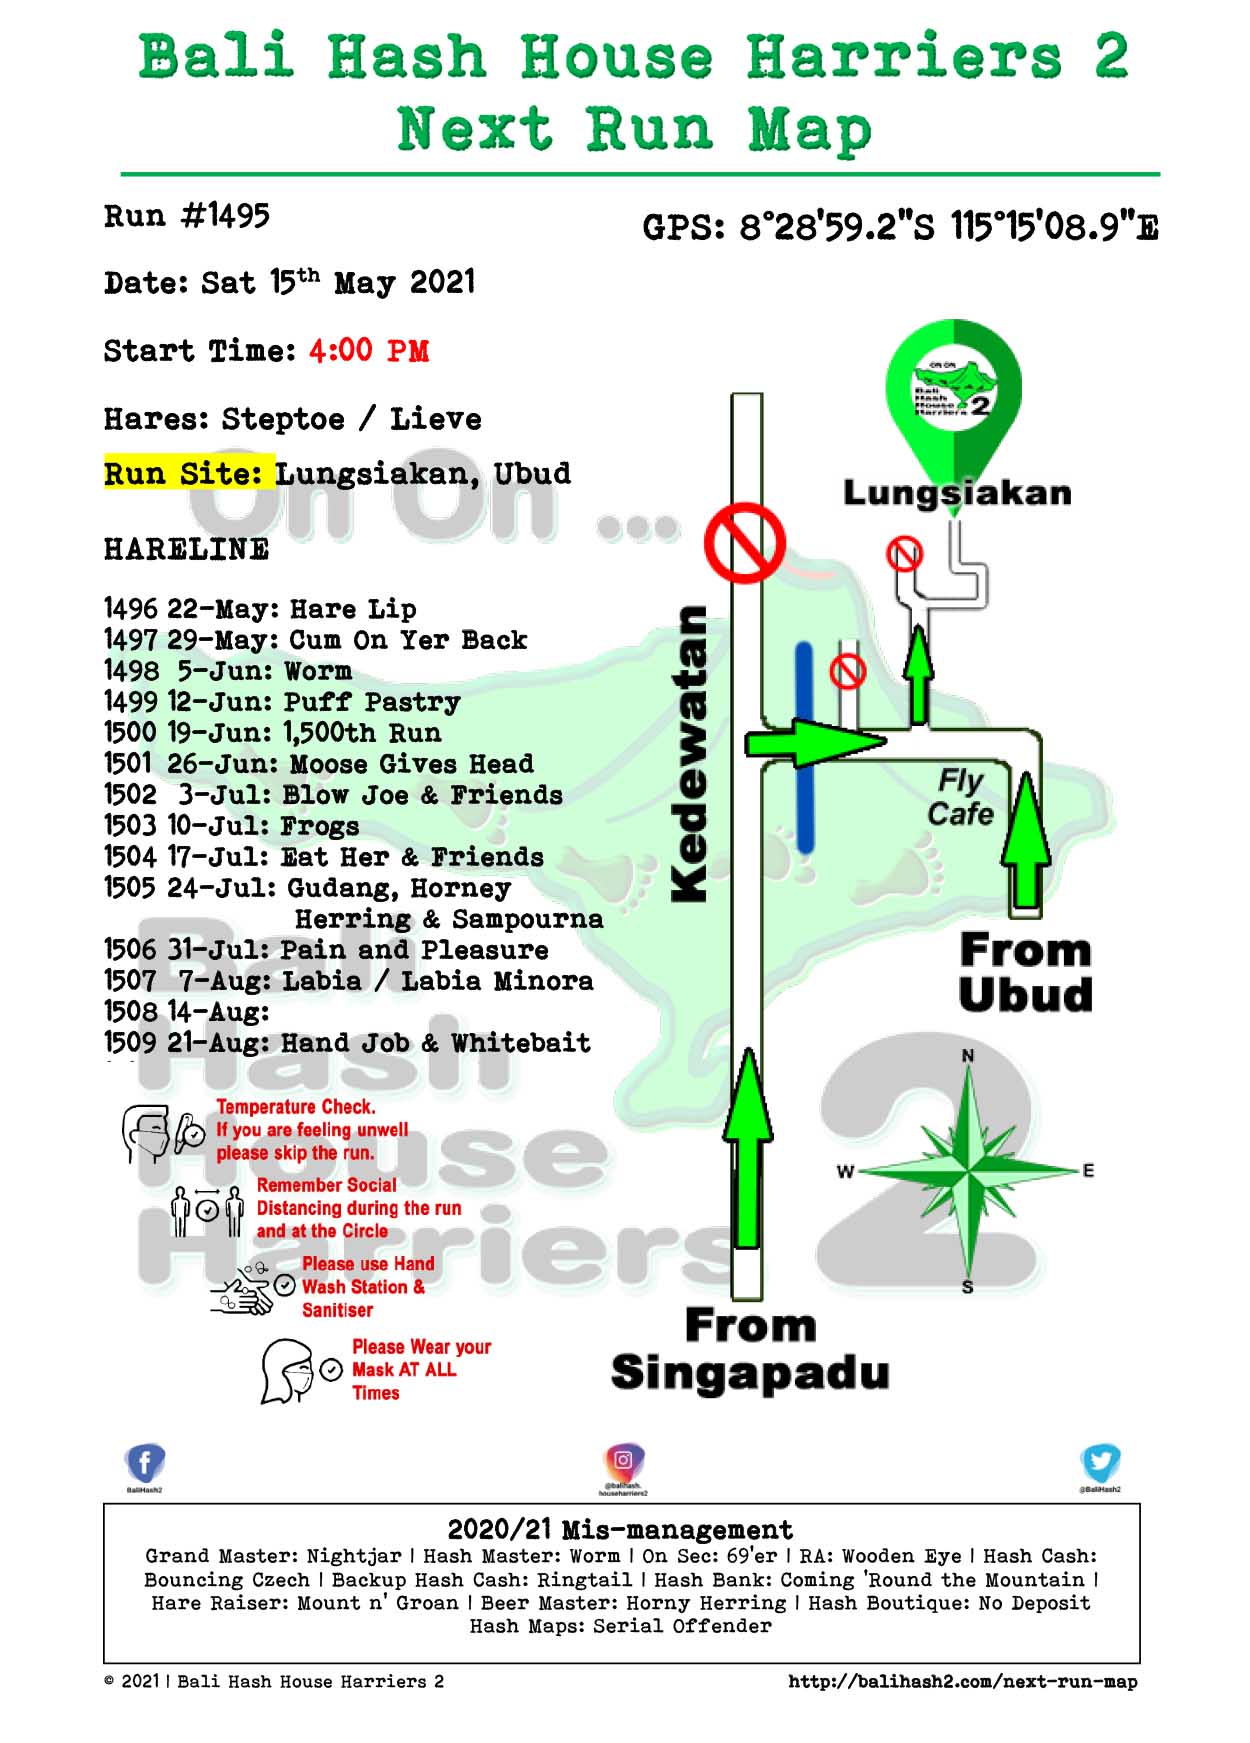 Bali Hash 2 Next Run Map #1495 Lungsiakan Ubud 15-May-21